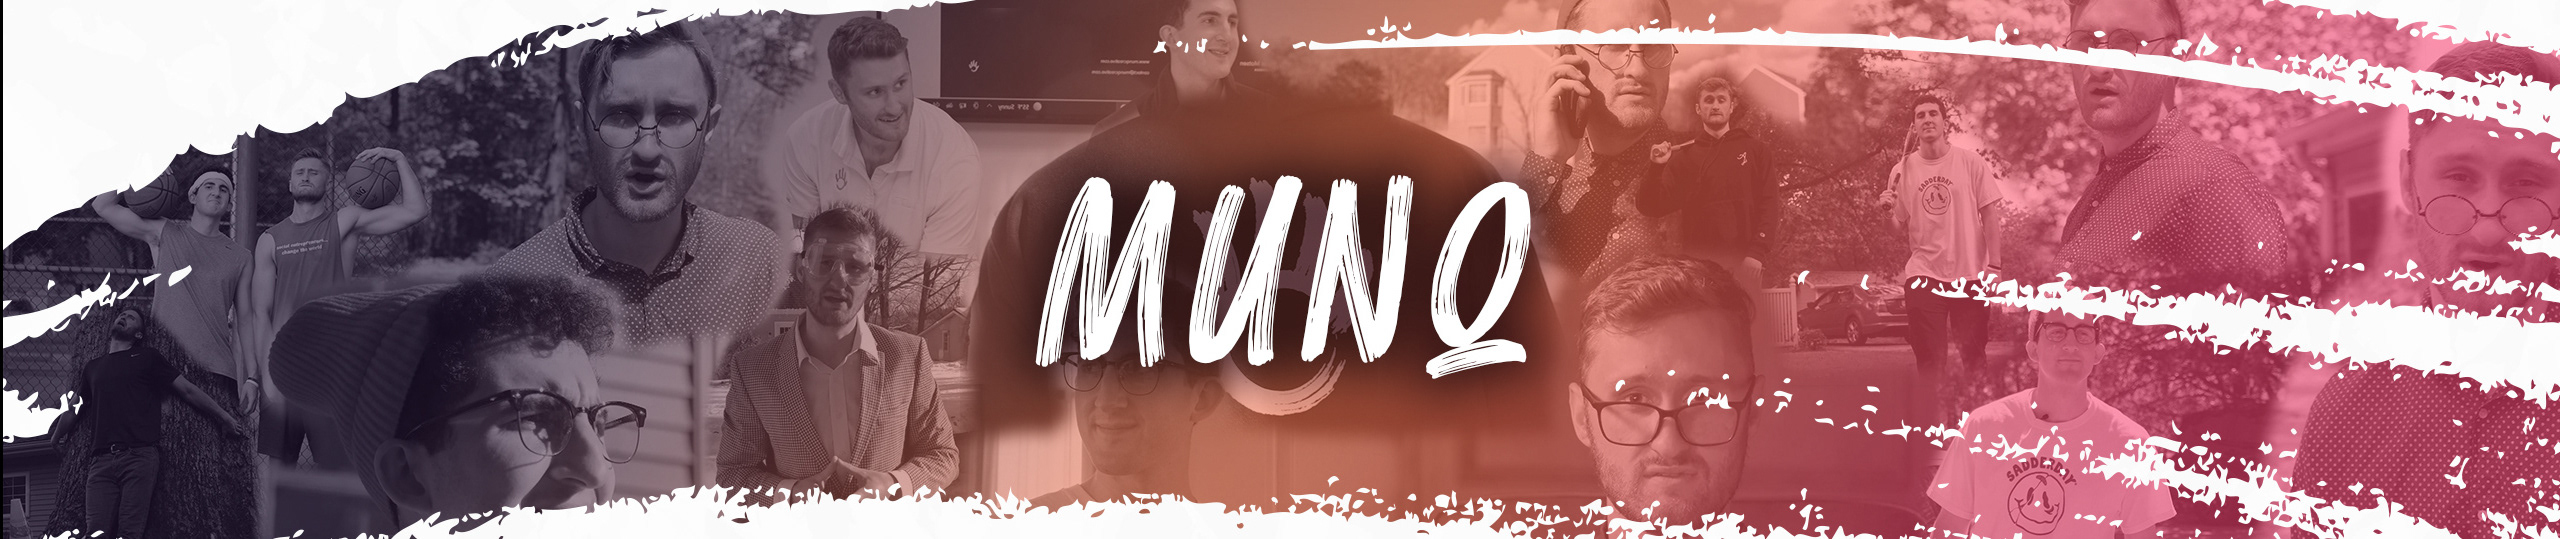 Munq Creative's profile banner